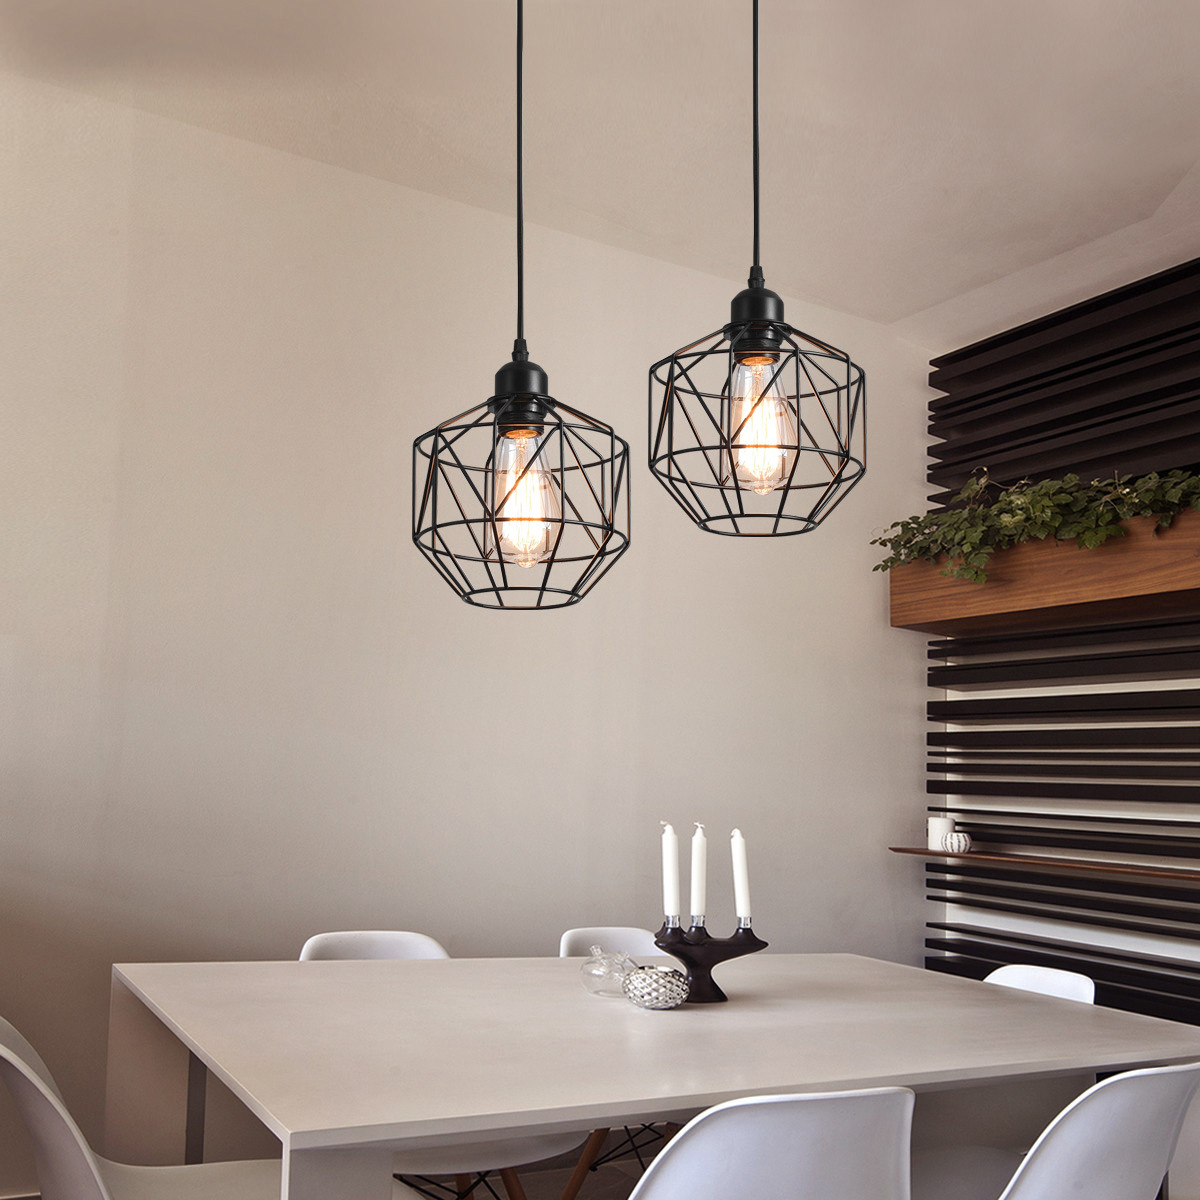 Modern-Home-Metal-Pendant-Lamp-Industrial-Hanging-Light-Fixture-Ceiling-Lamp-1841326-7